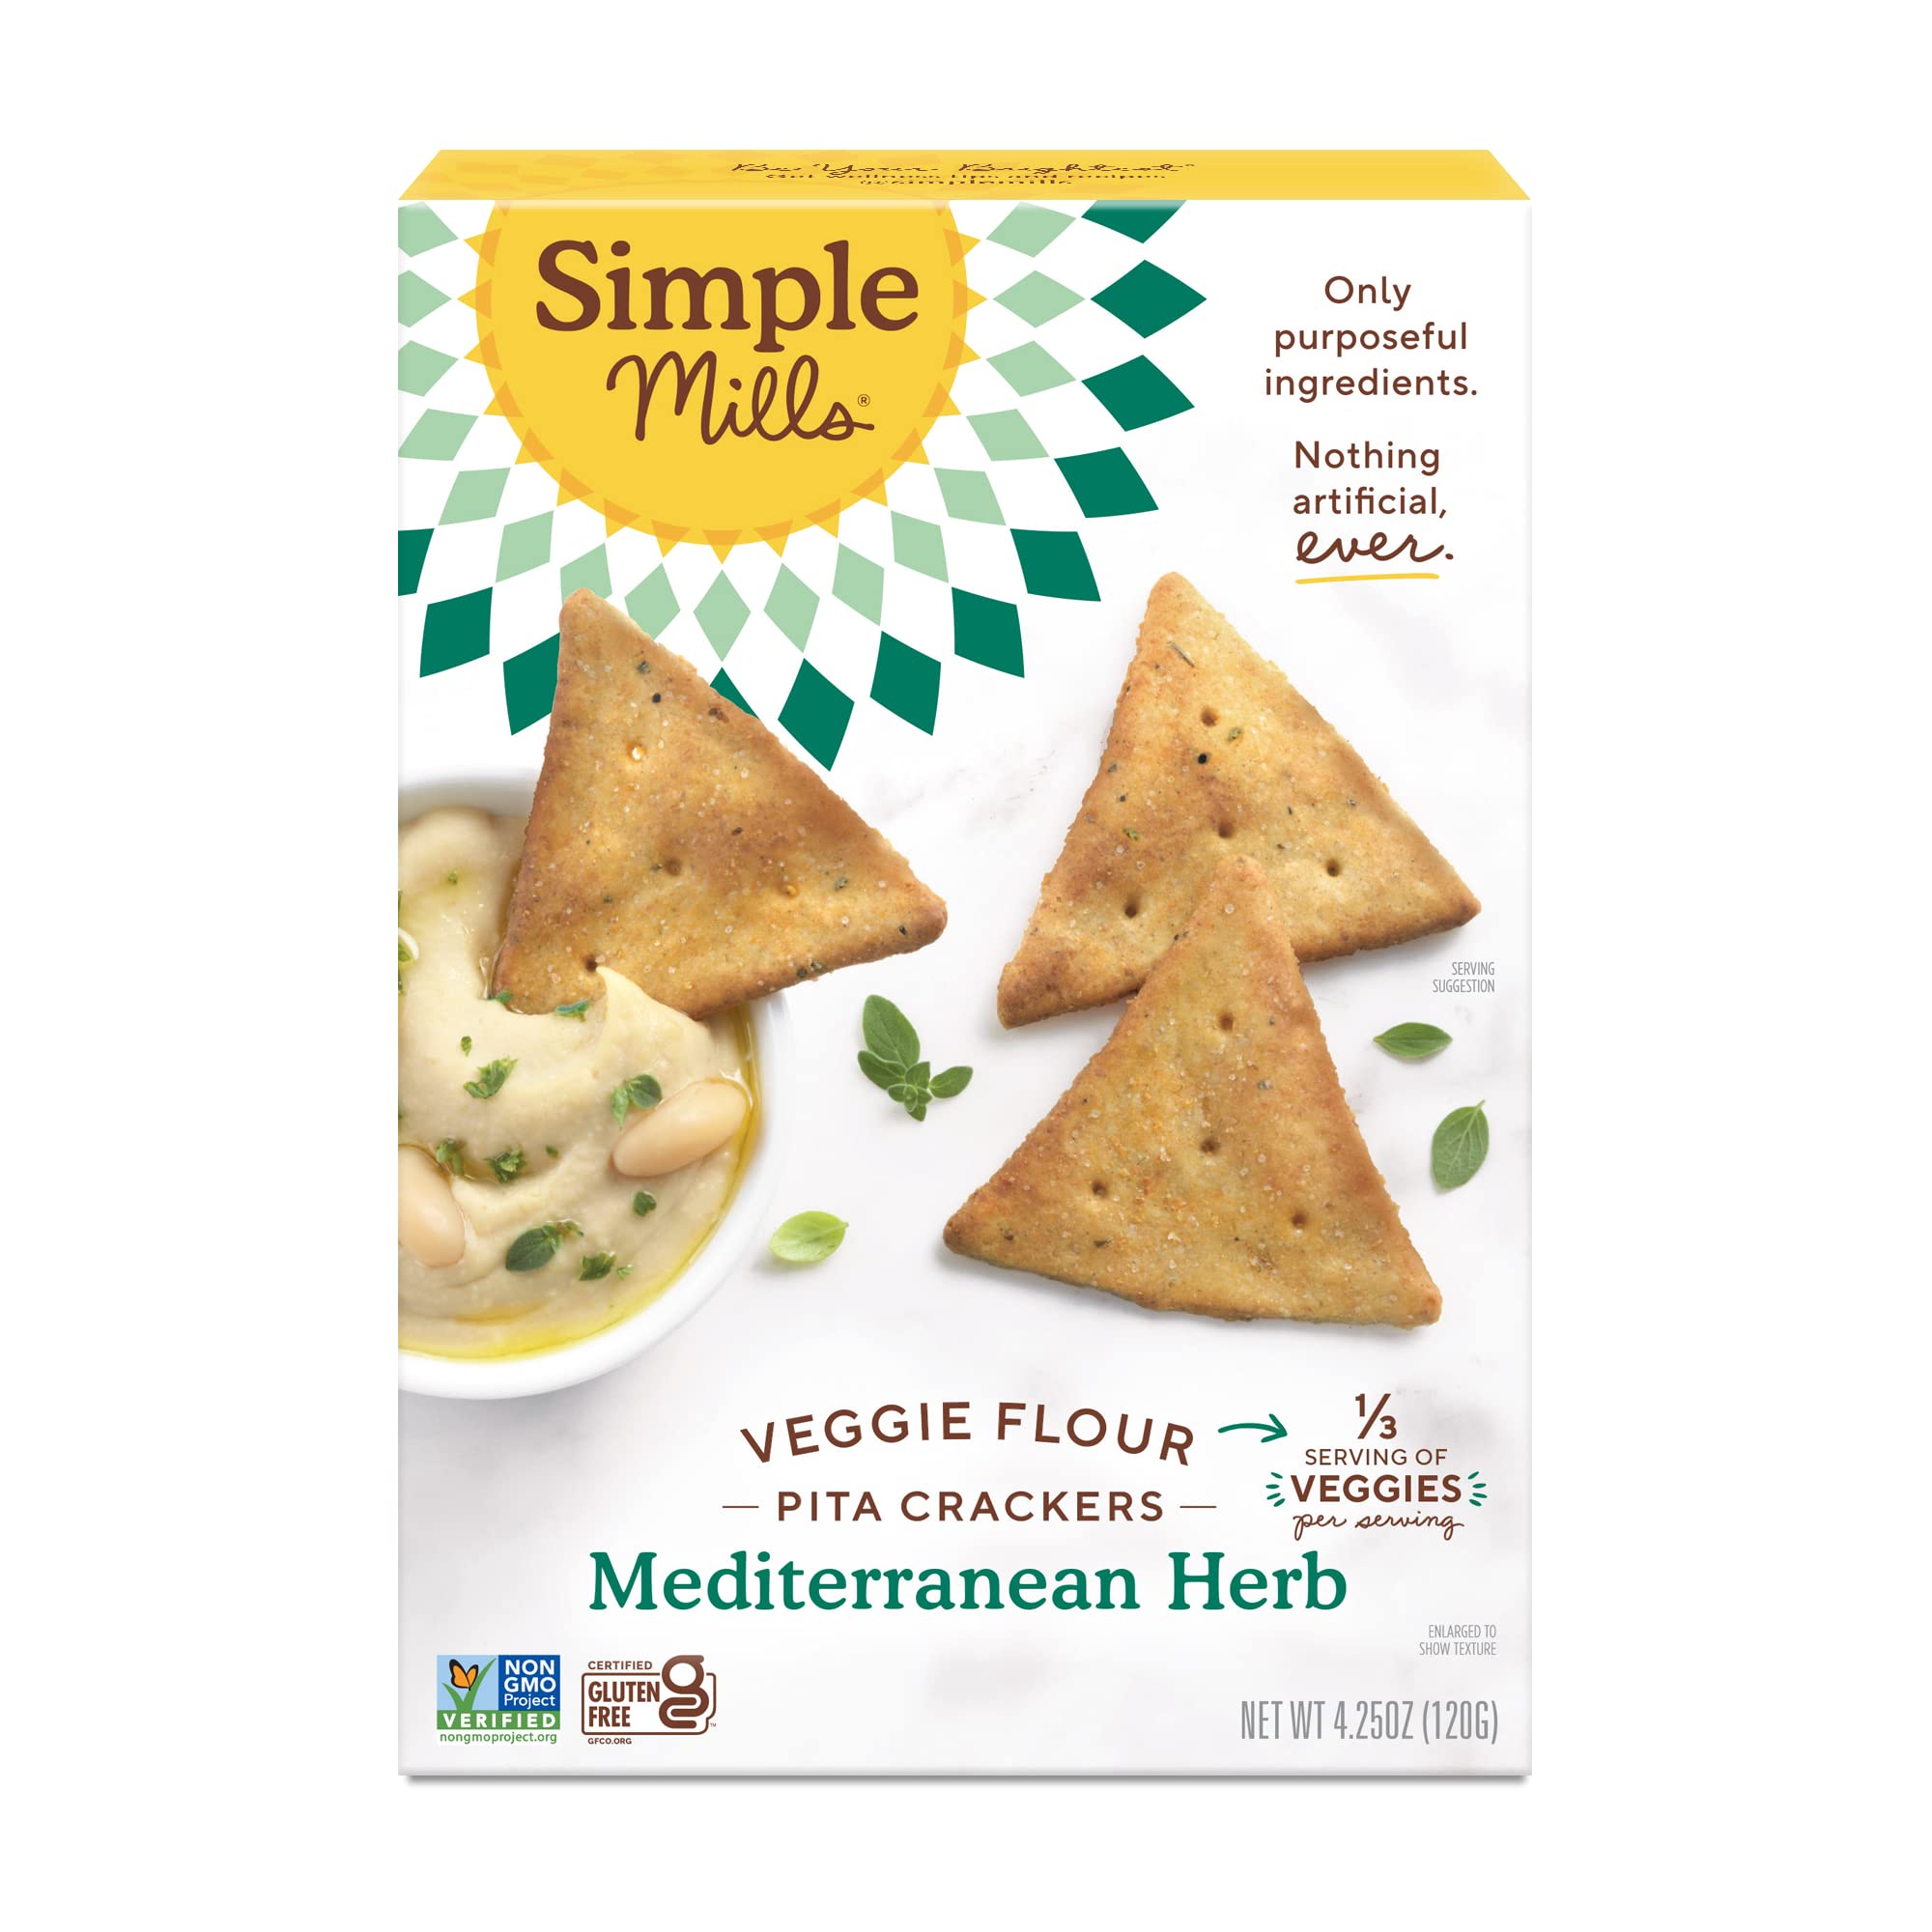 4.25-Oz Simple Mills Gluten Free Vegan Veggie Pita Crackers (Mediterranean Herb) $2.25 w/ S&S + Free Shipping w/ Prime or on $35+